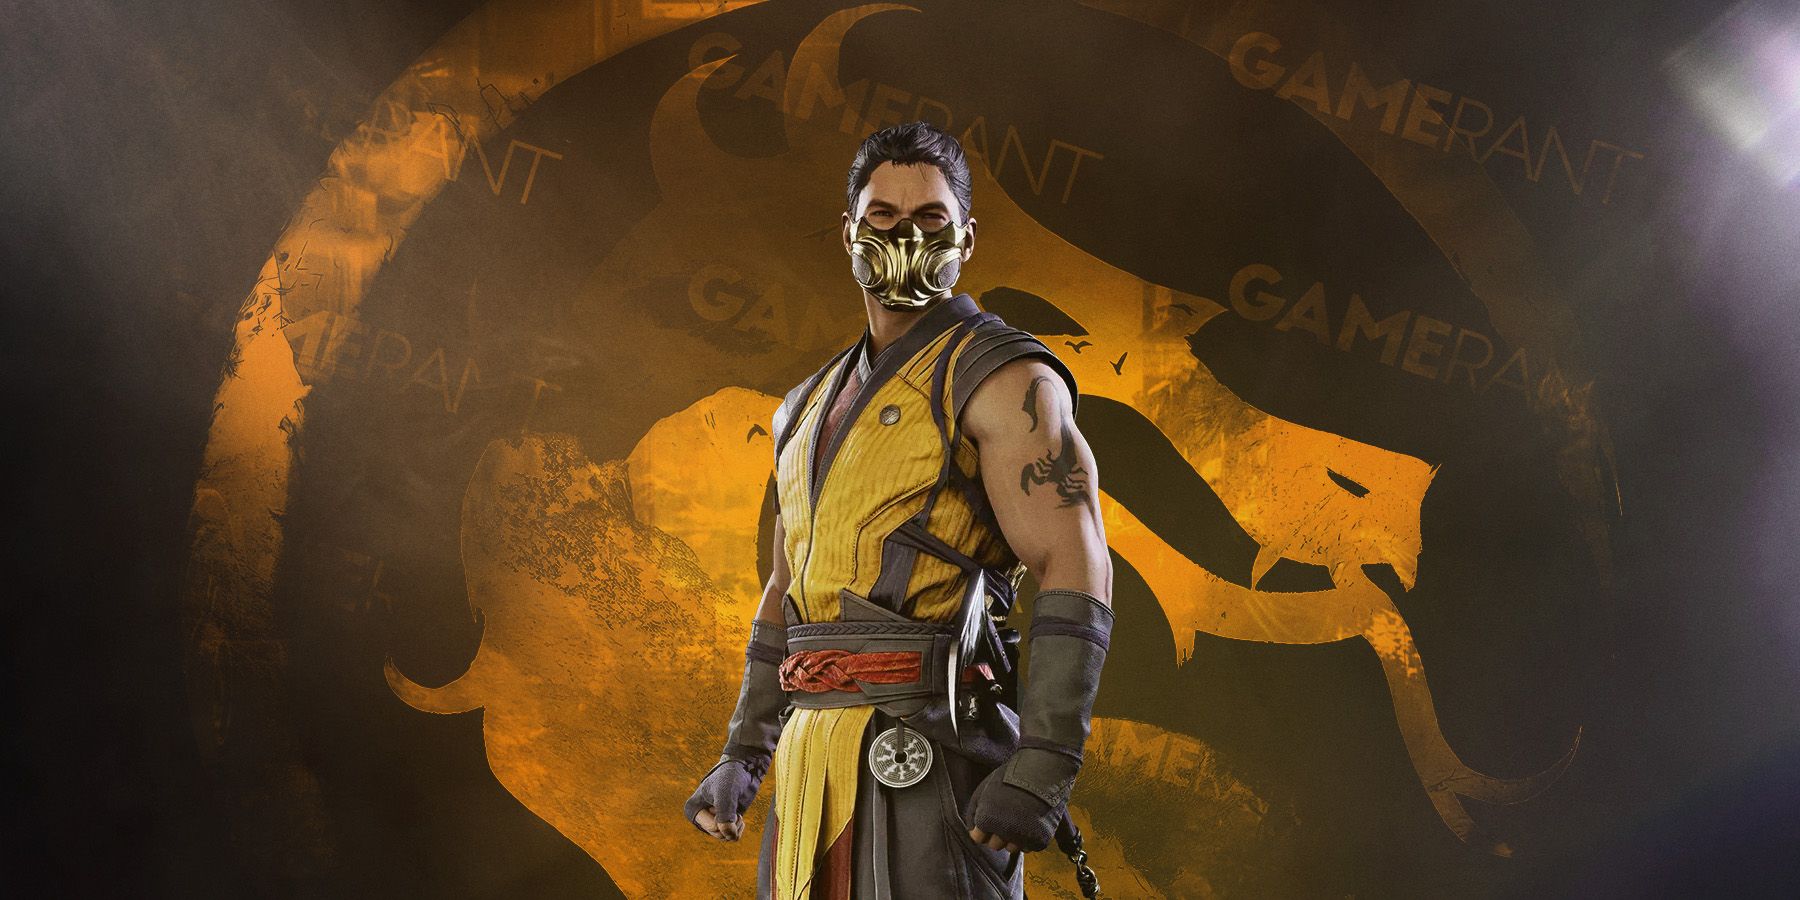 Mortal Kombat 1 (2023) Invasions Season Of The Spectre Guide - Mortal  Kombat Secrets